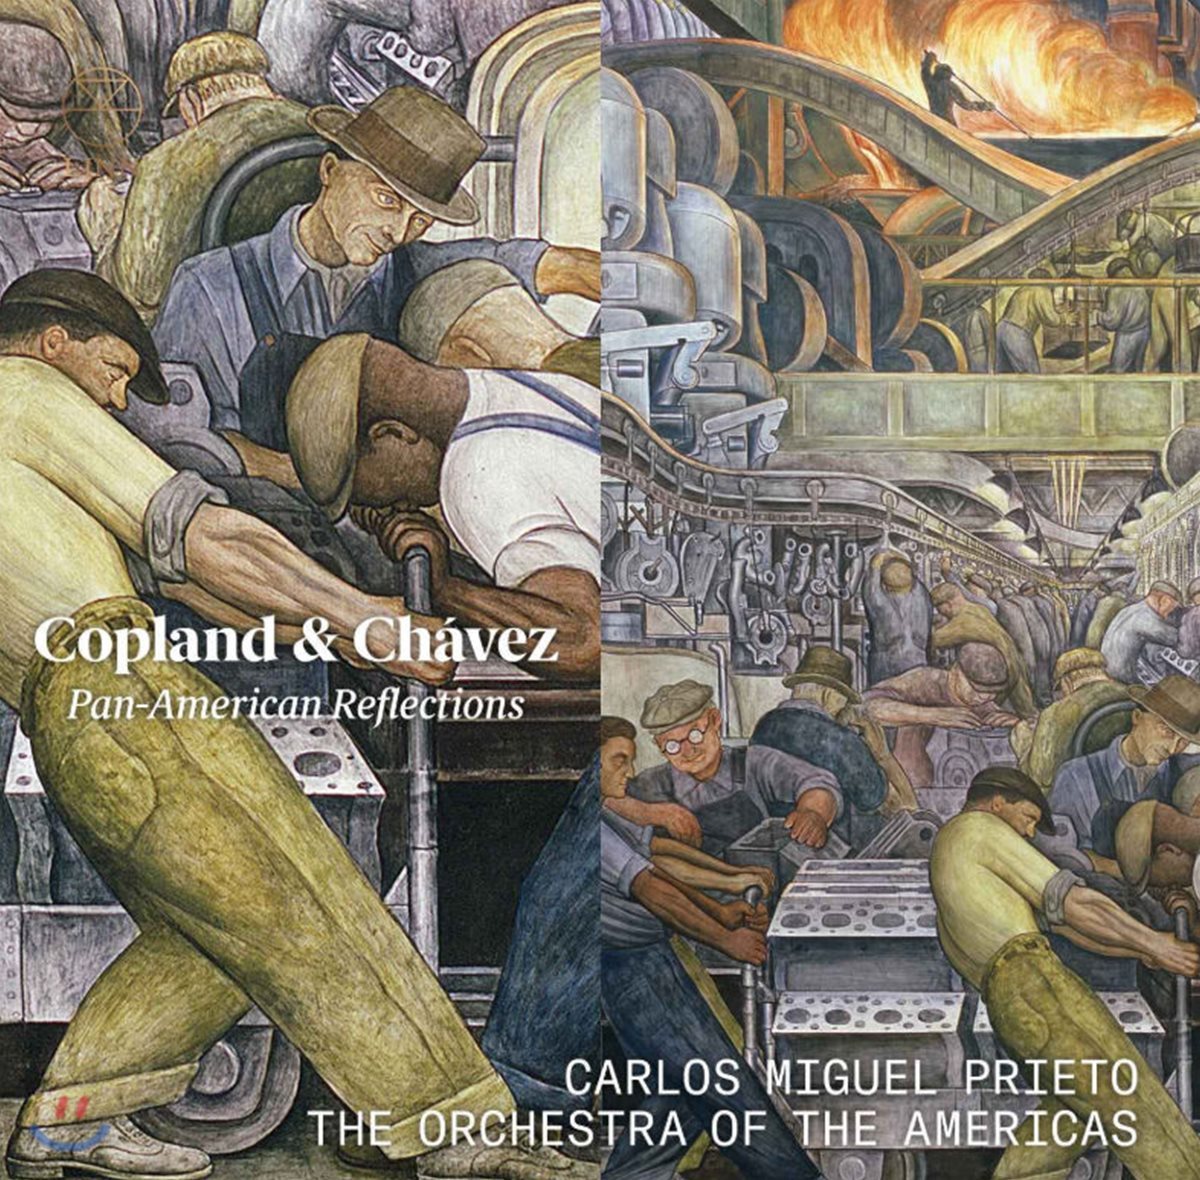 Carlos Miguel Prieto 아론 코플랜드: 교향곡 3번 / 카를로스 차베스: 교향곡 2번 (Copland / Chavez: Pan-American Reflections)